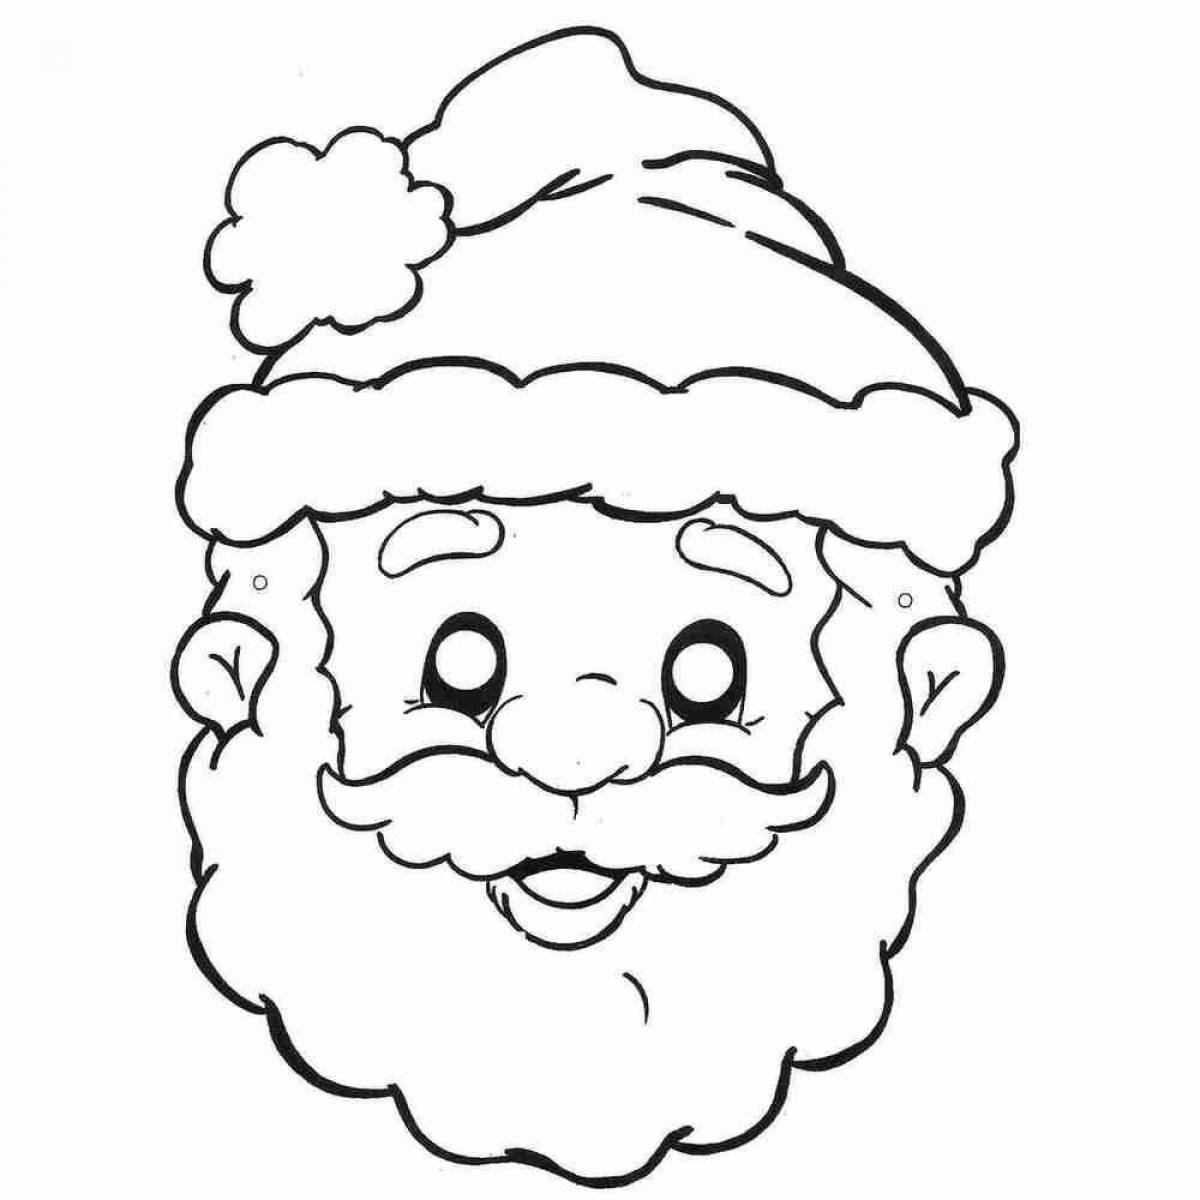 Live santa face coloring page